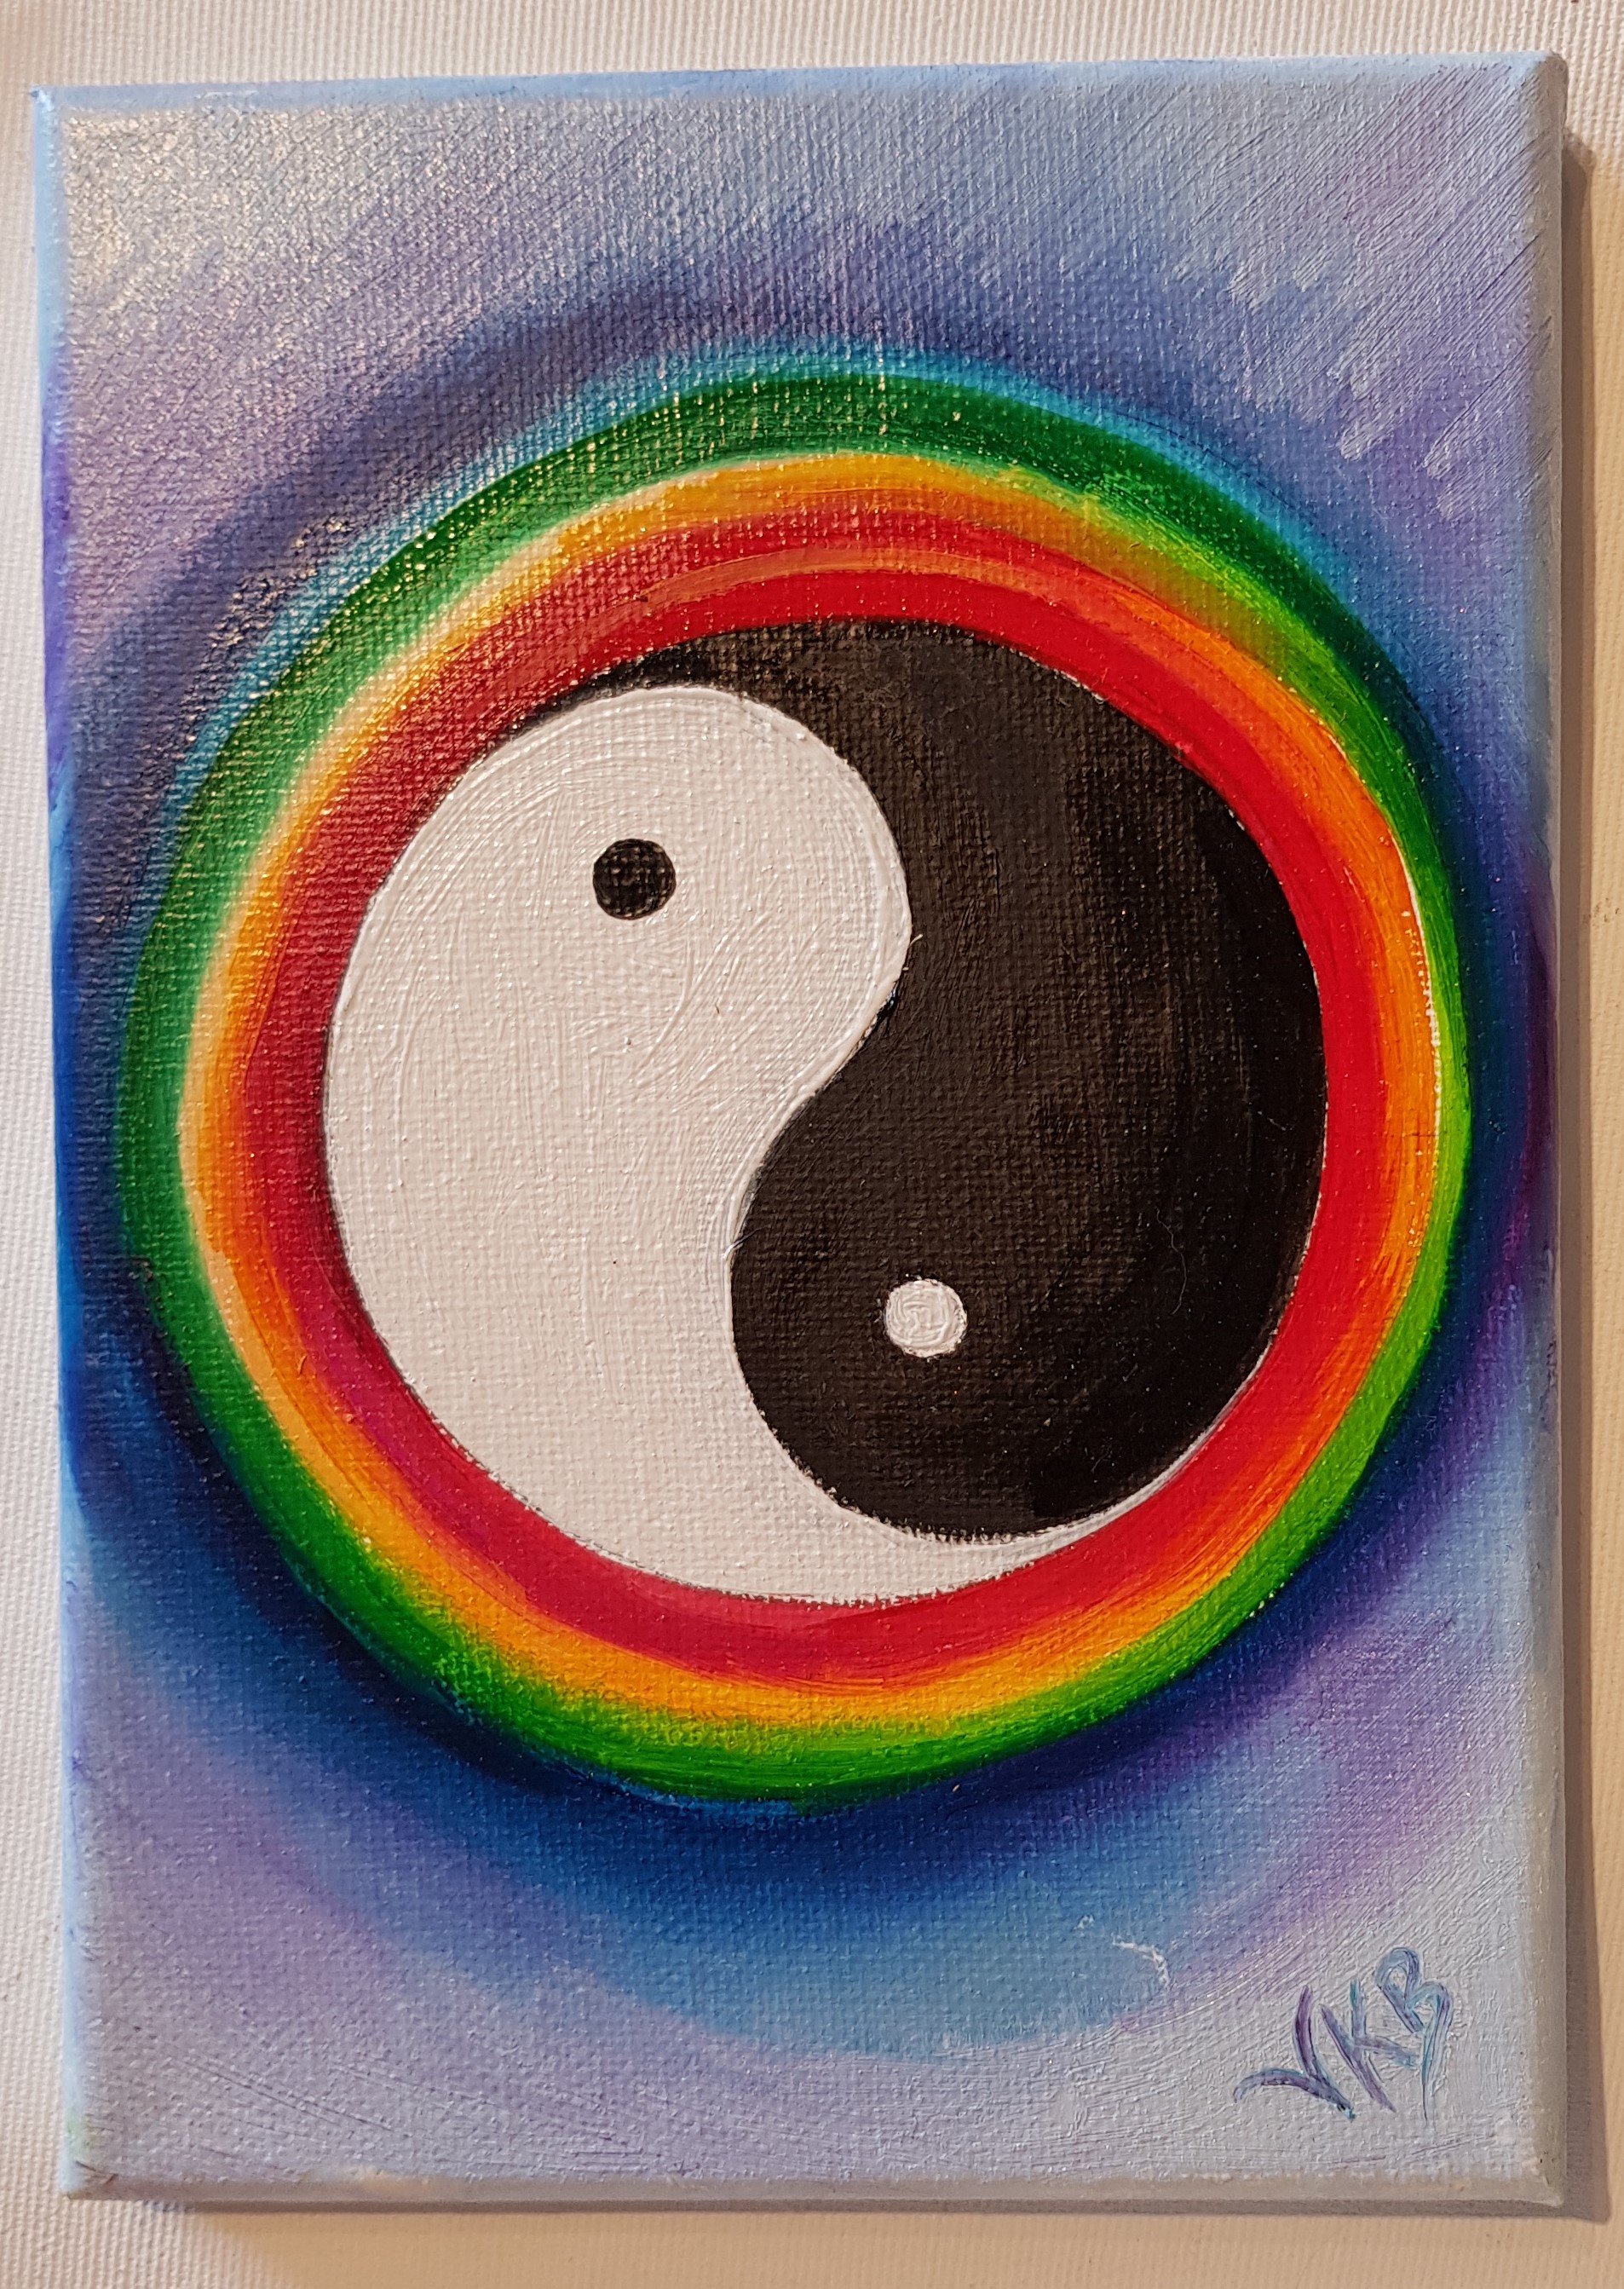 The Five Elements, Yin & Yang